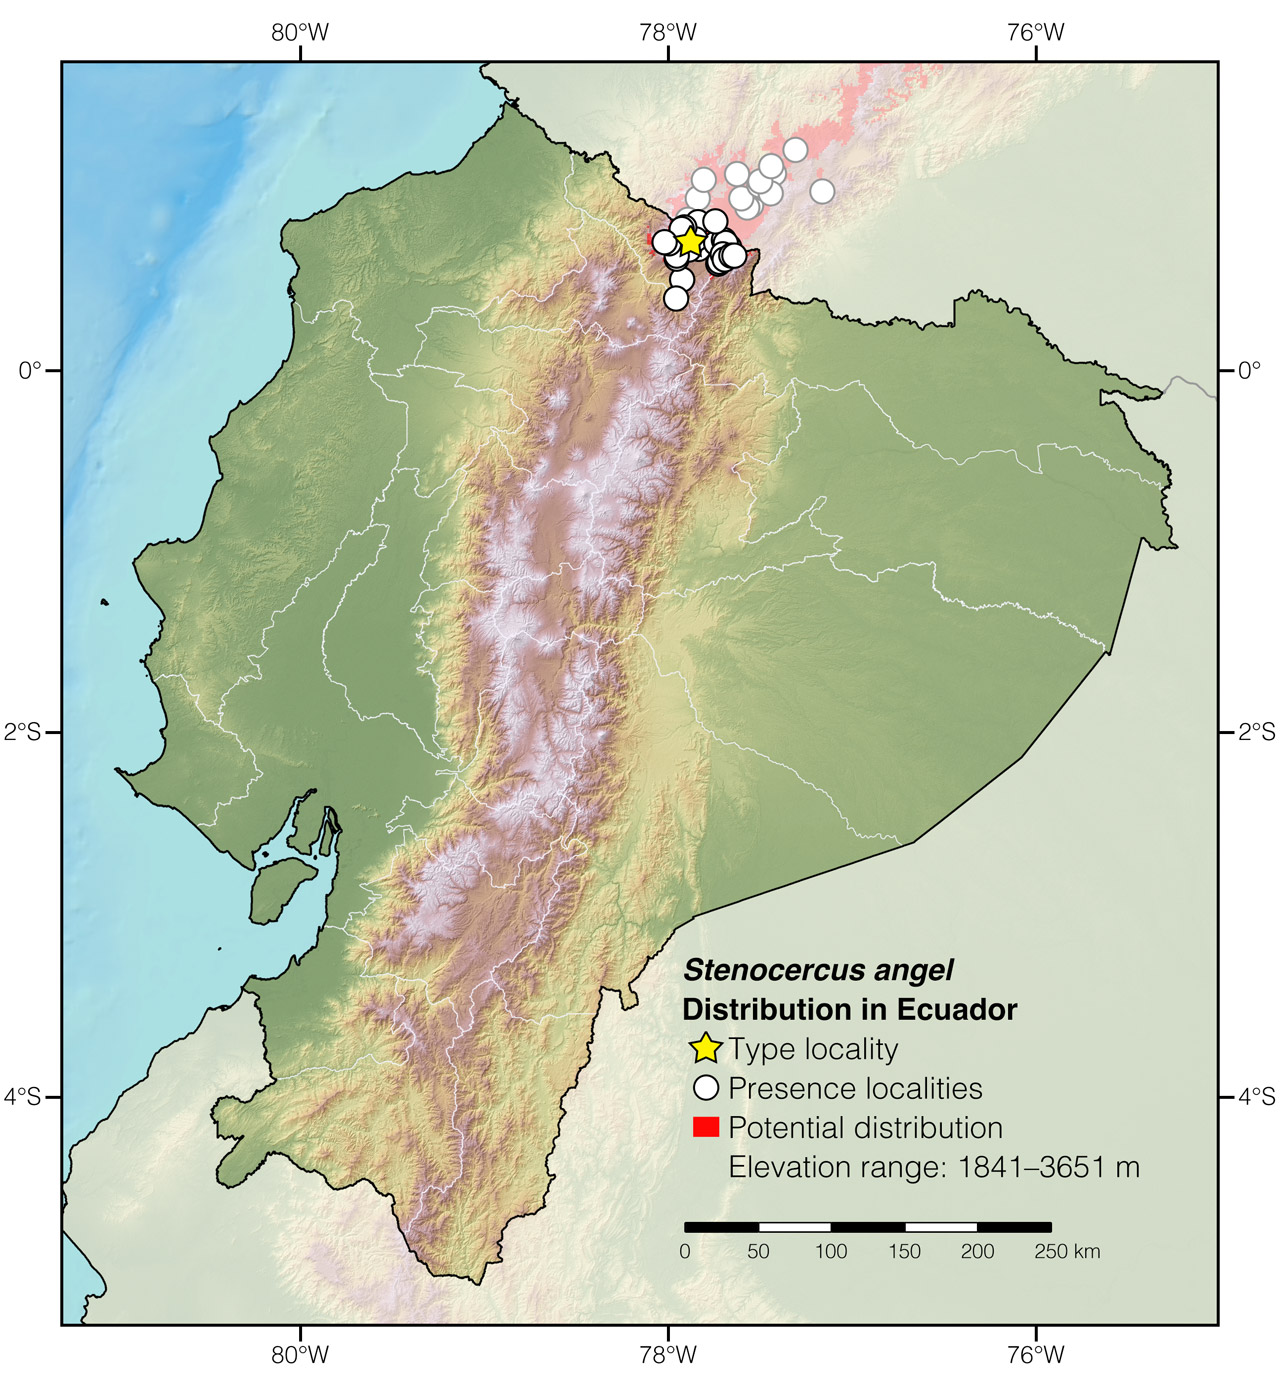 Distribution of Stenocercus angel in Ecuador